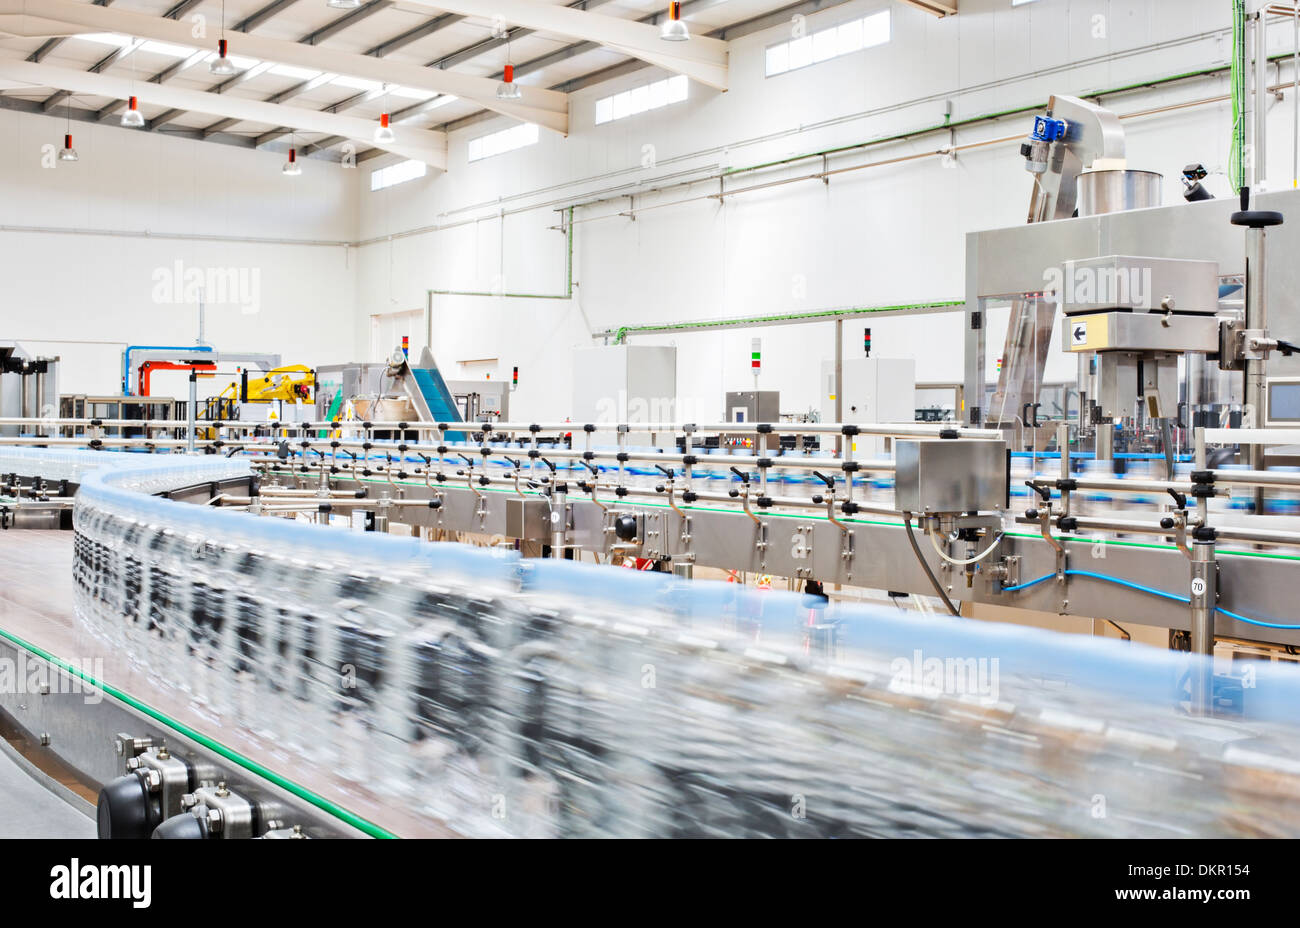 Bottles on conveyor belt in factory Stock Photo